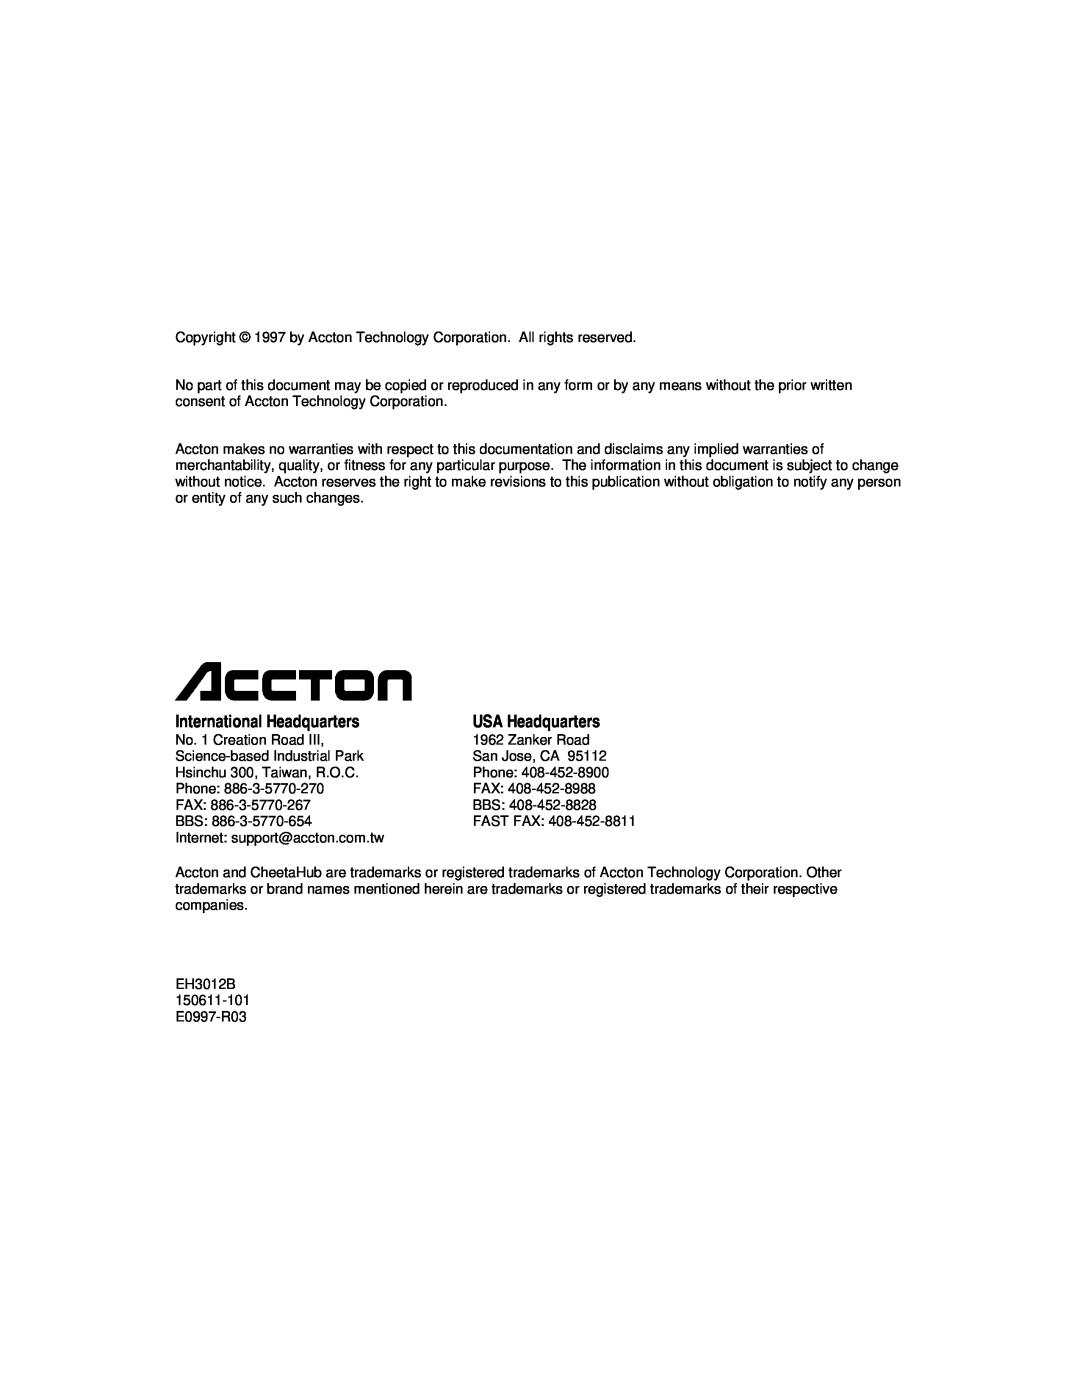 Accton Technology 3012B manual International Headquarters, USA Headquarters, Fast Fax 